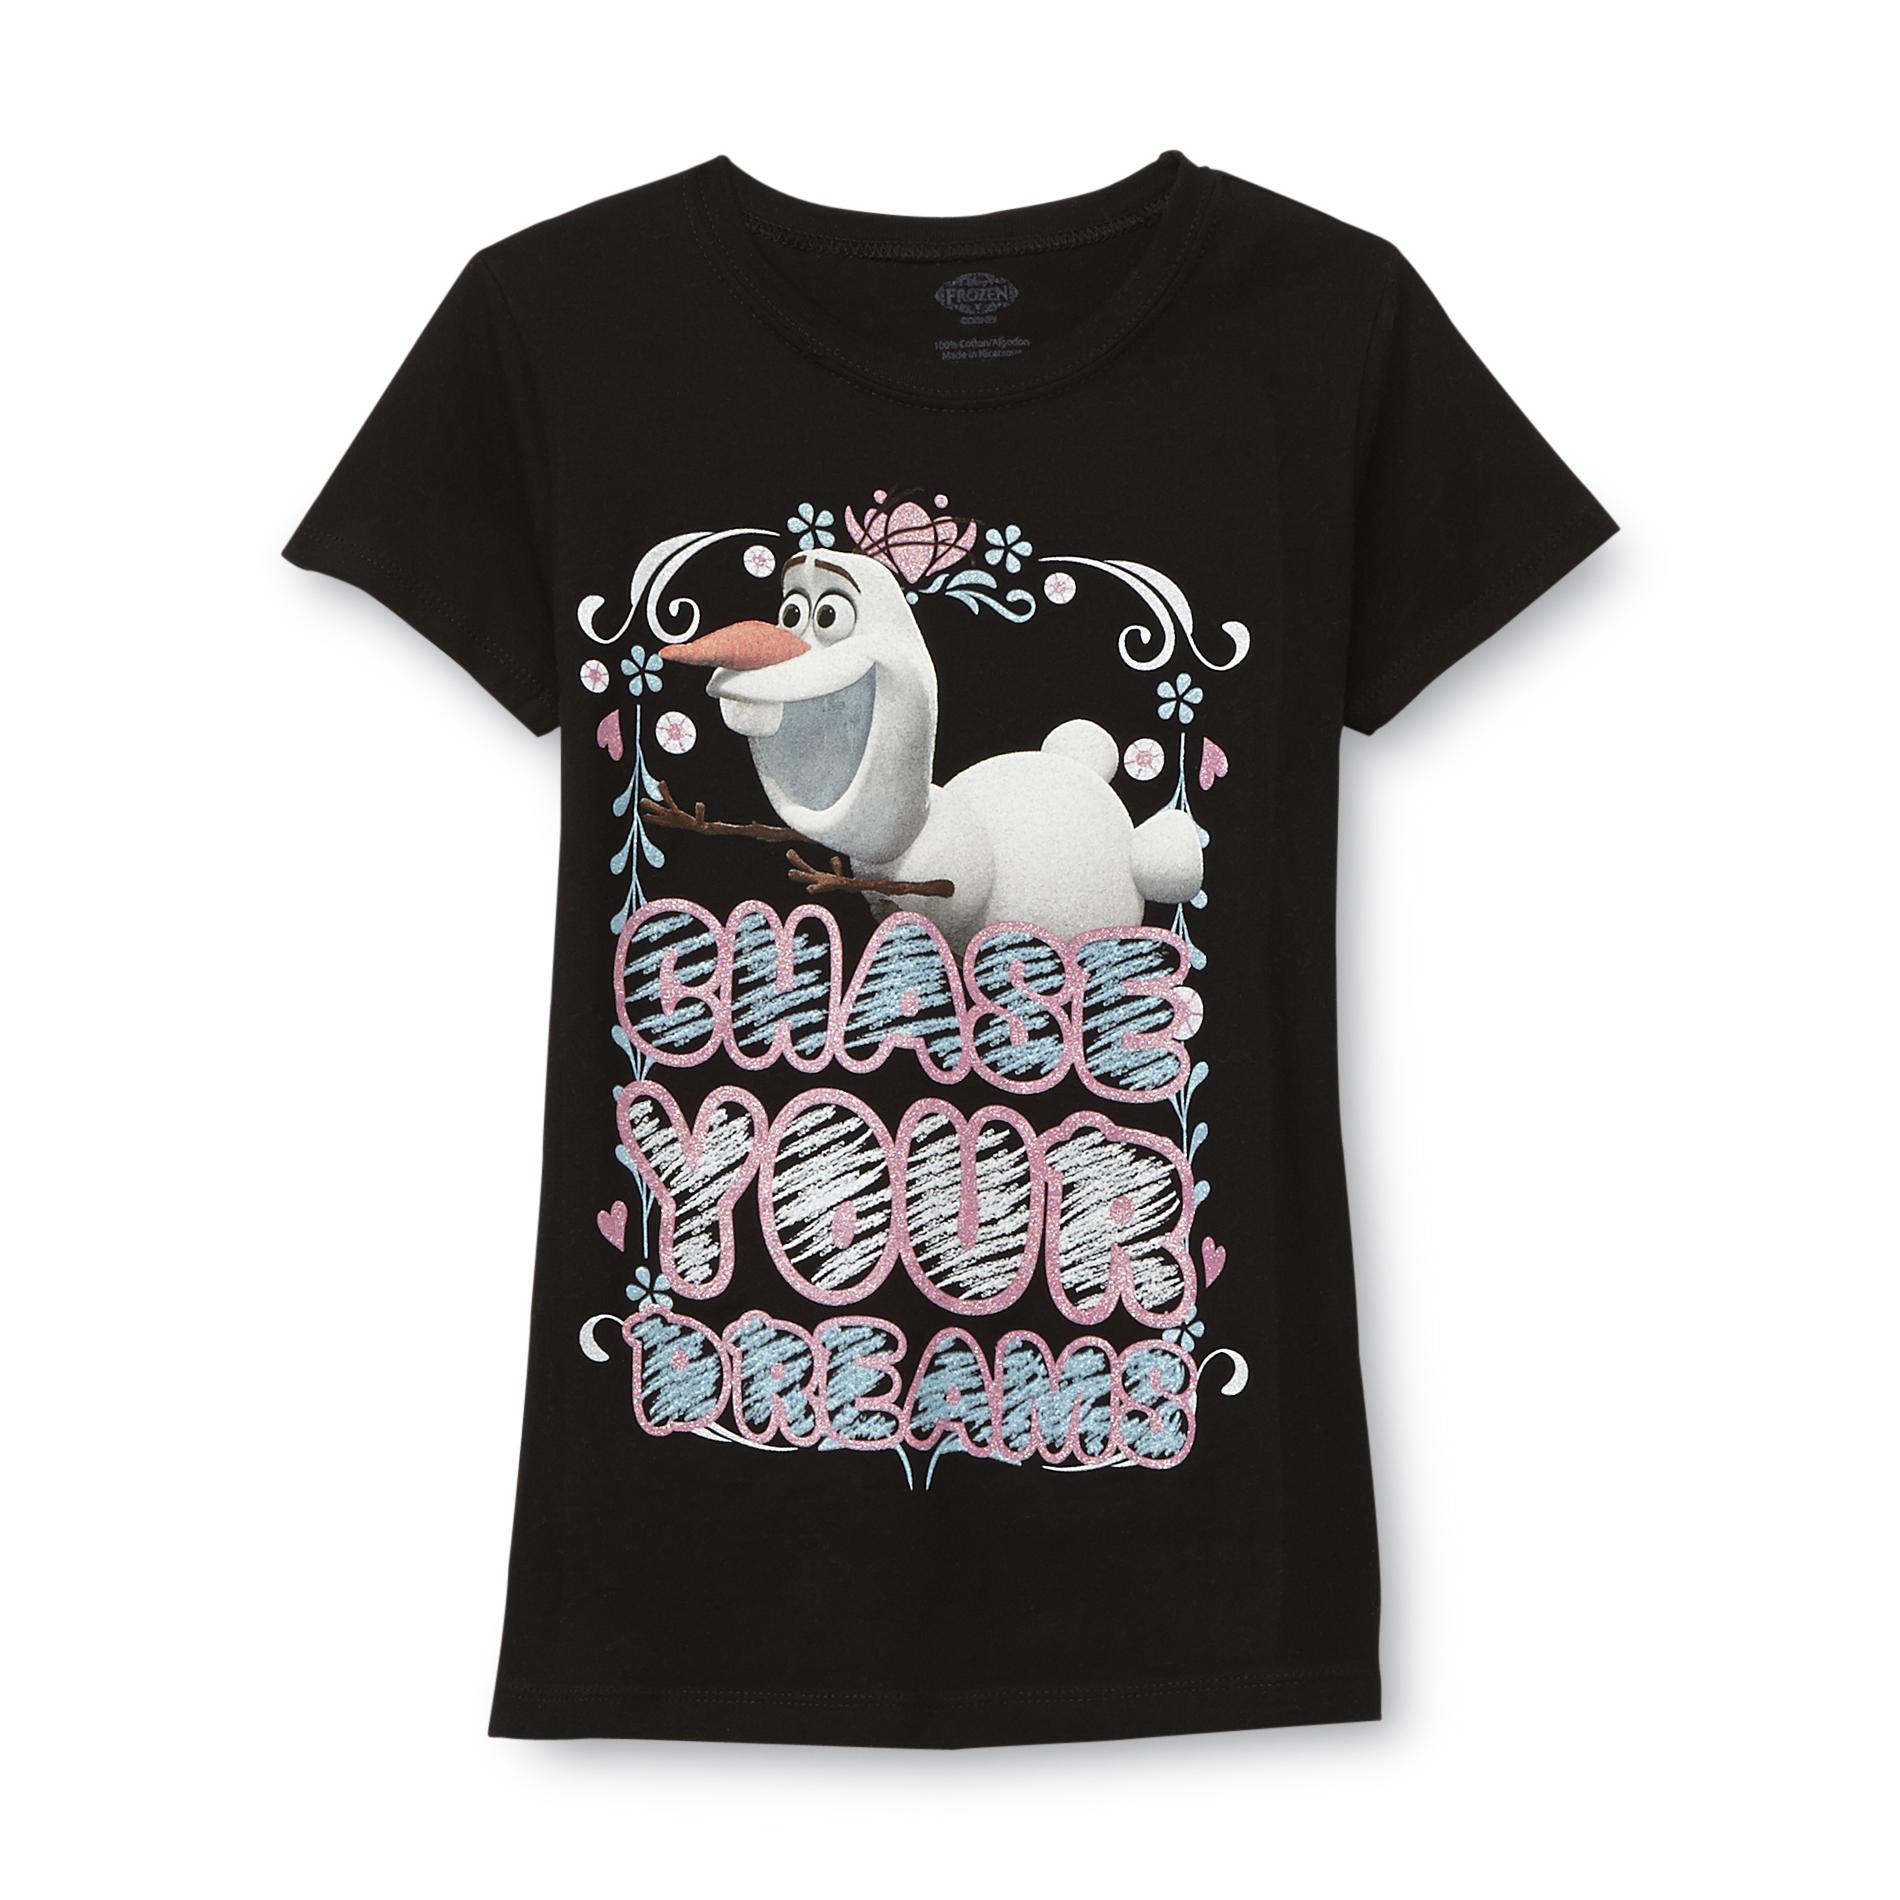 Disney Frozen Girl's Graphic T-Shirt - Olaf